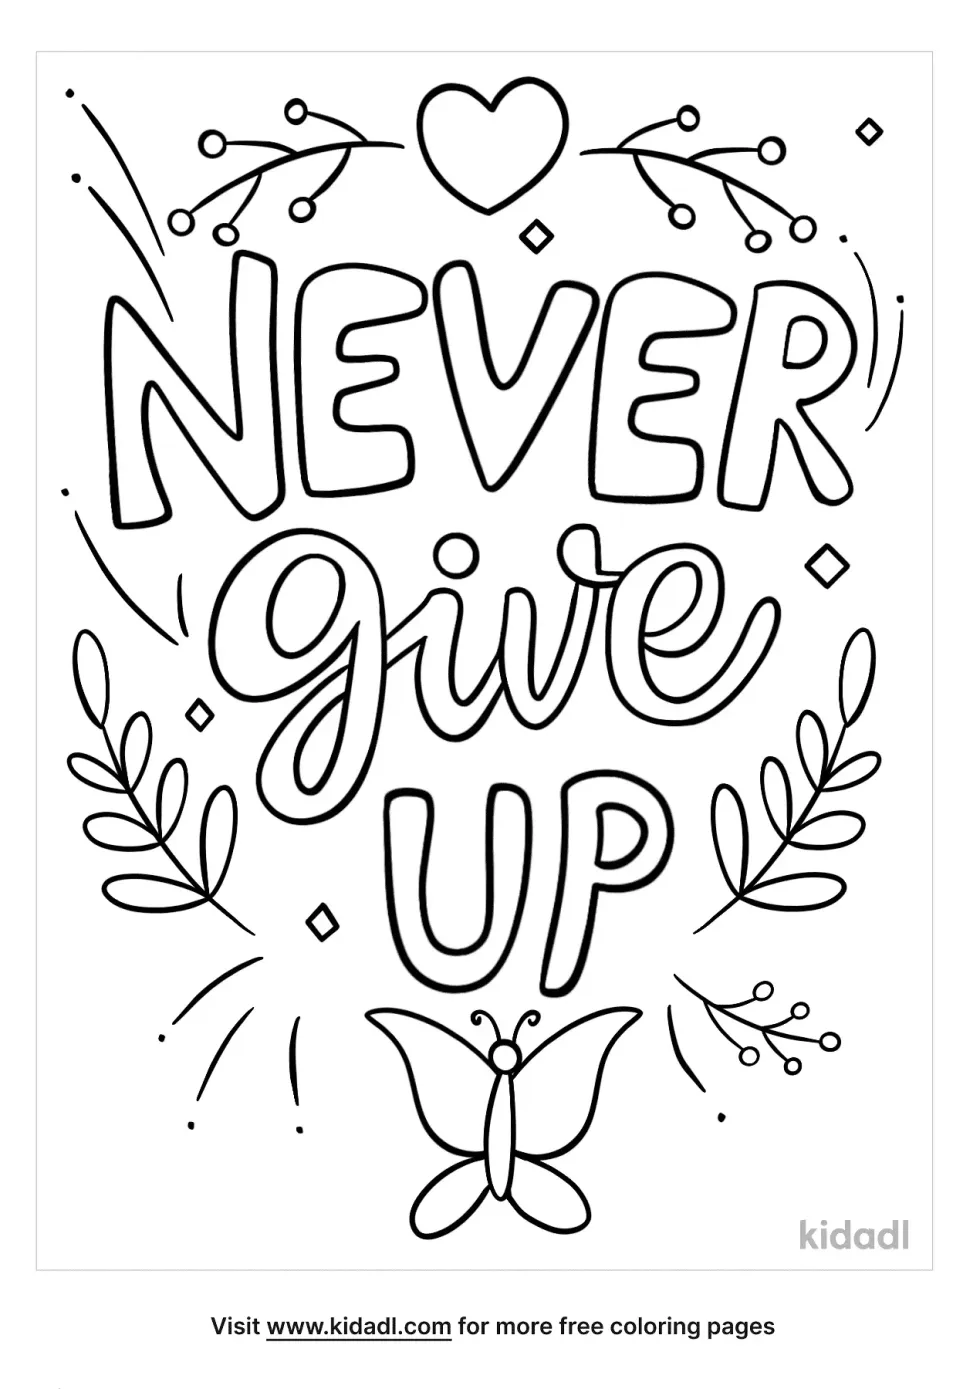 Never Give Up | Kidadl